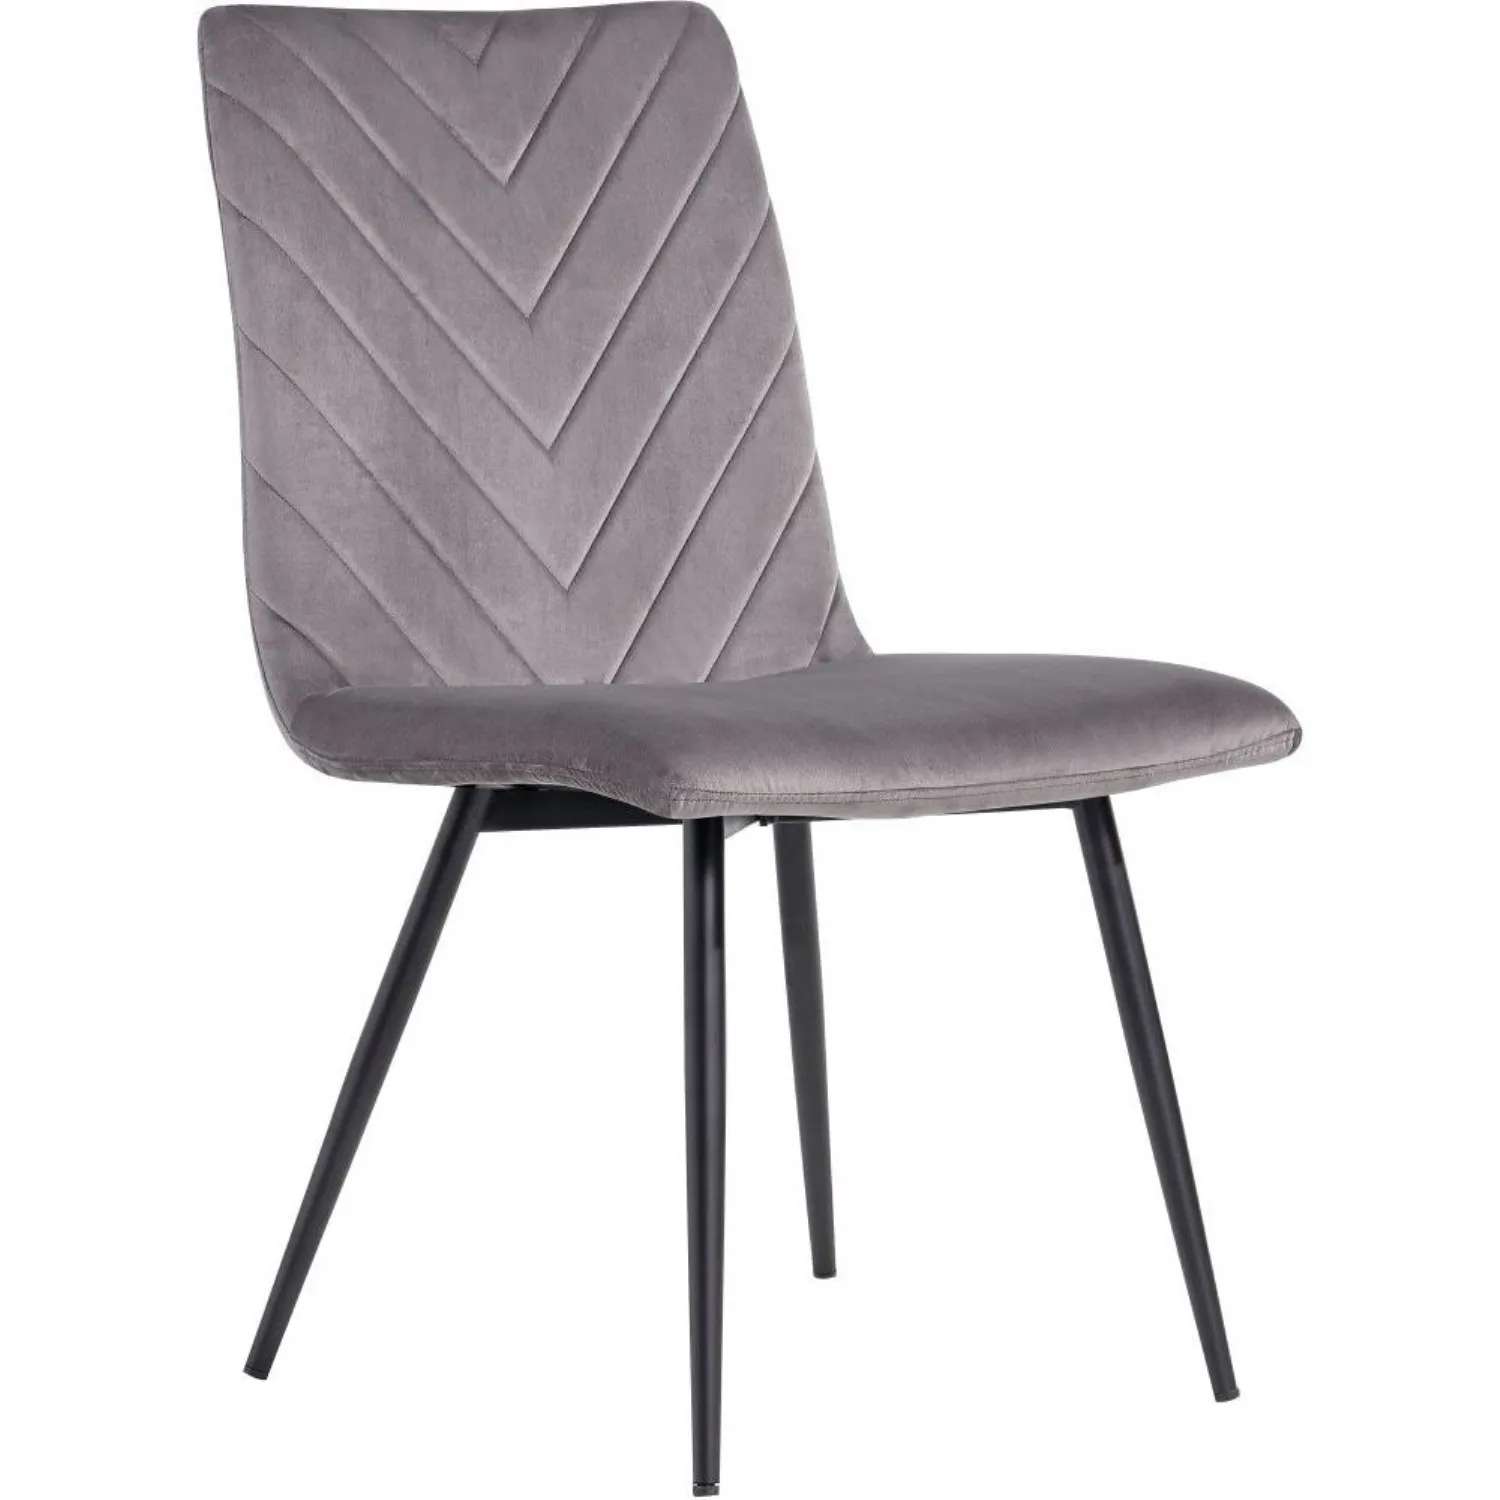 The Chair Collection Retro Dining Dark Grey Velvet